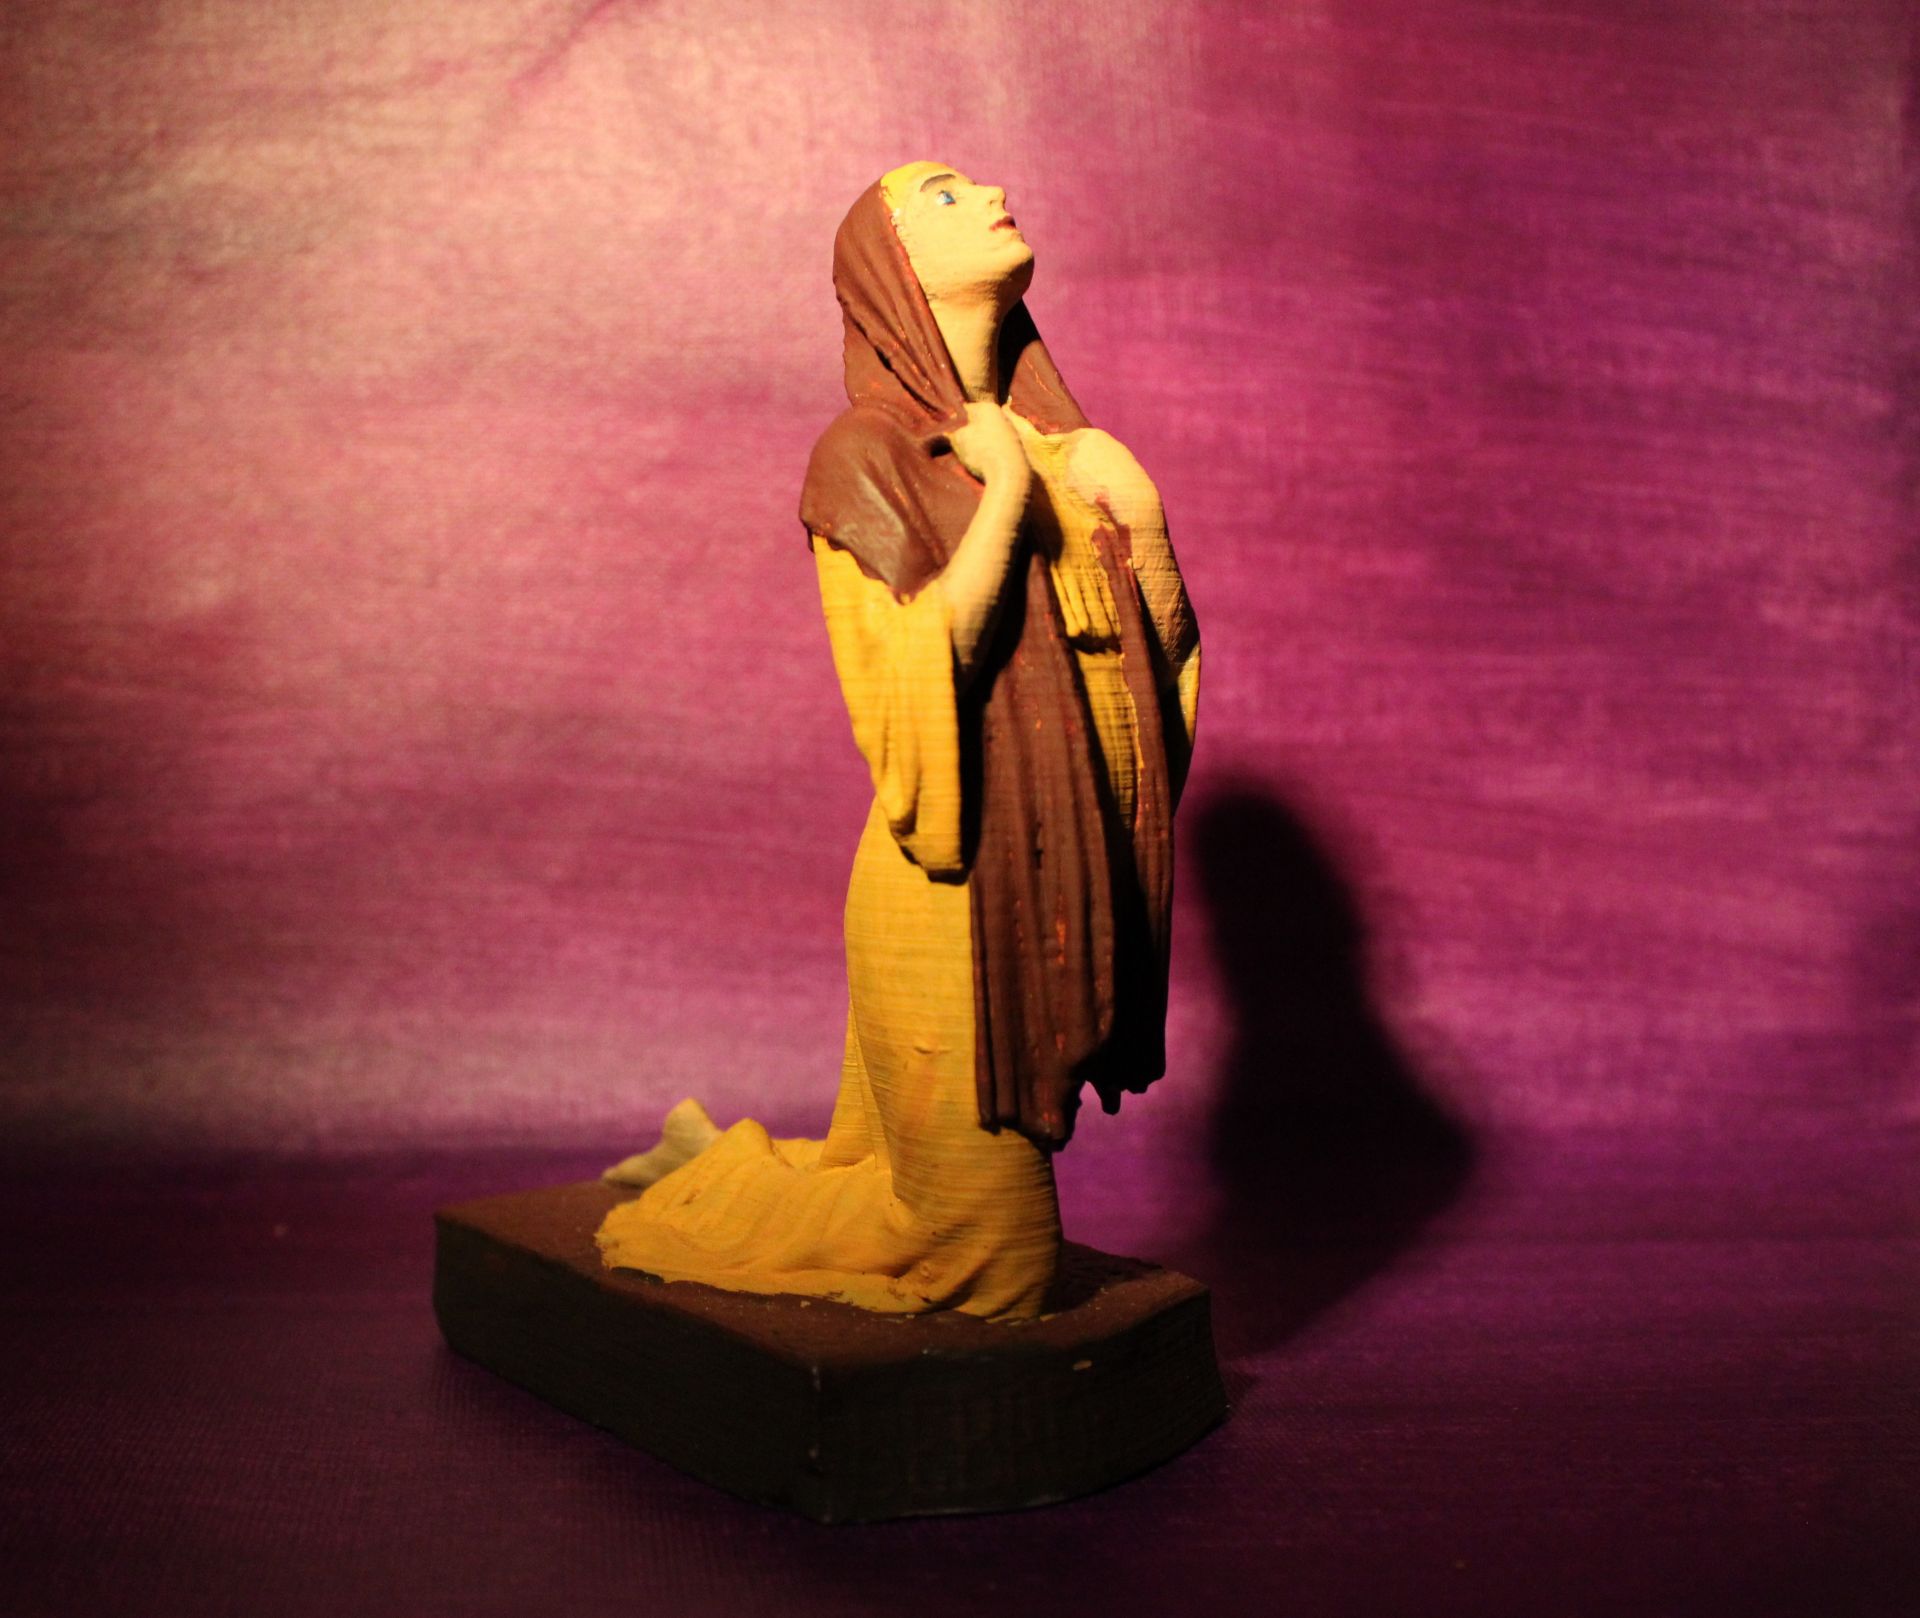 Archangel Gabriel Annunciation Standing Statue A-026S · Museumize